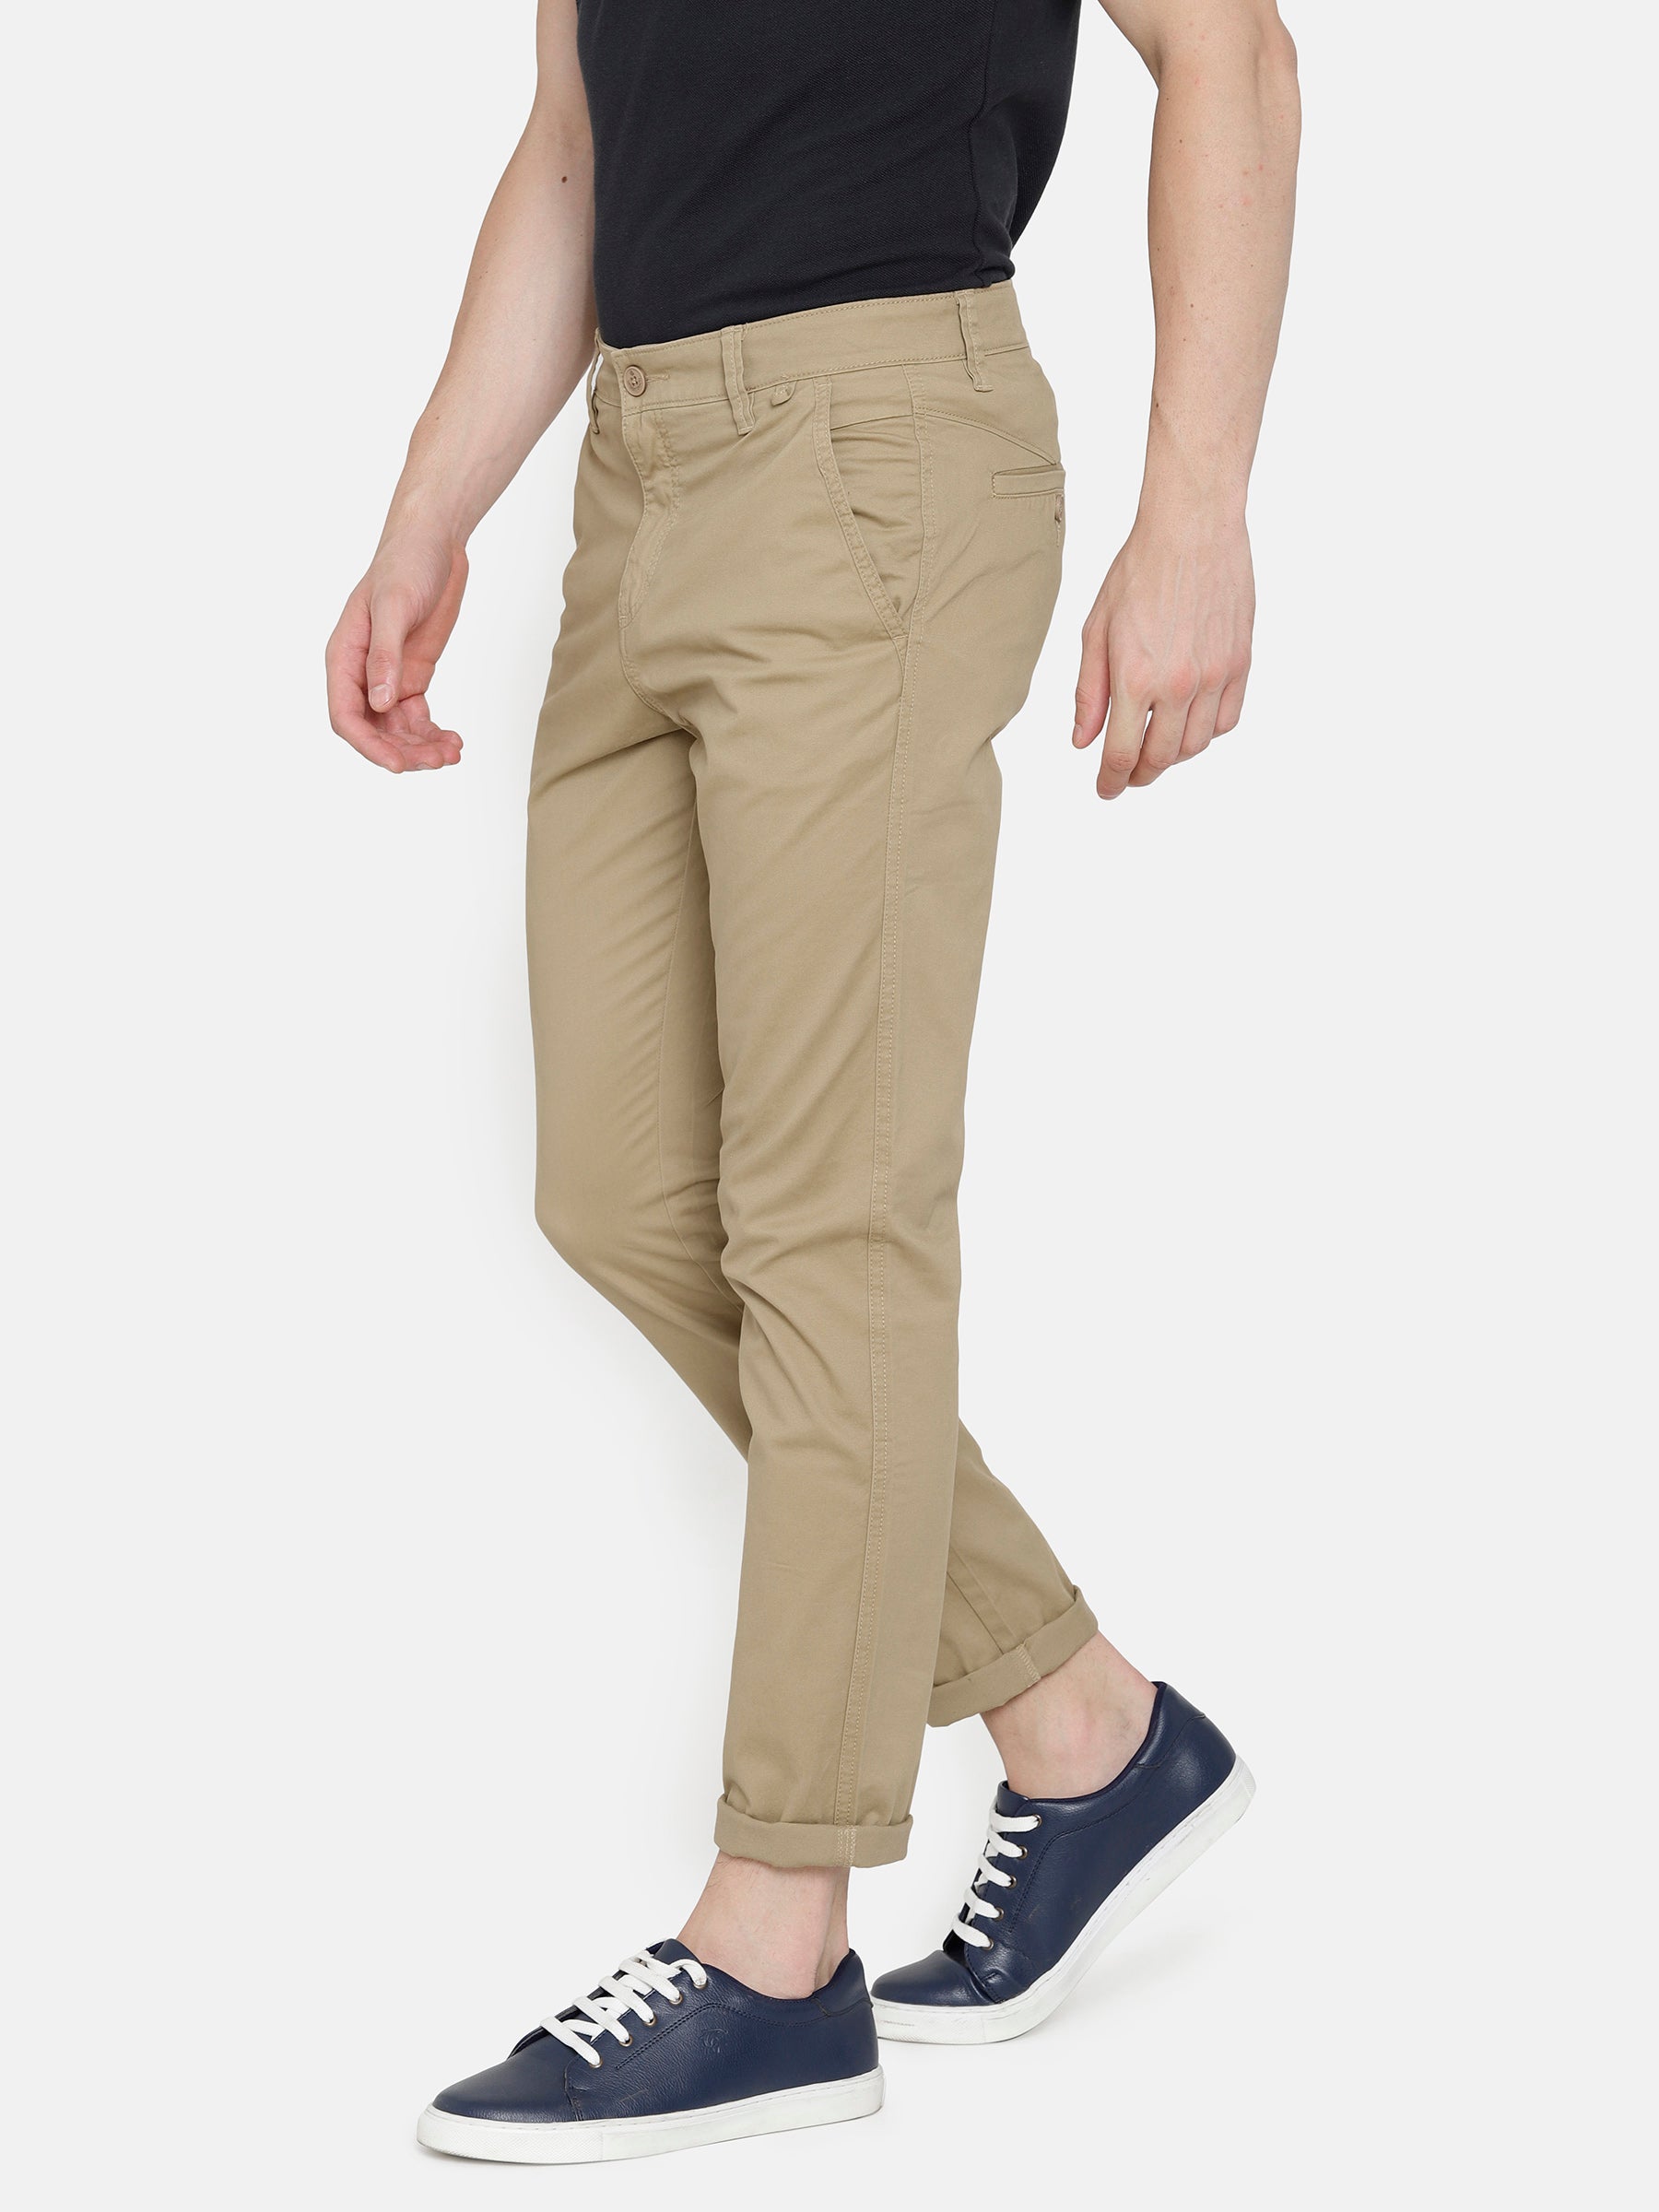 Light Khaki Men's Stretch Pants, All-In Pants | Swet Tailor®